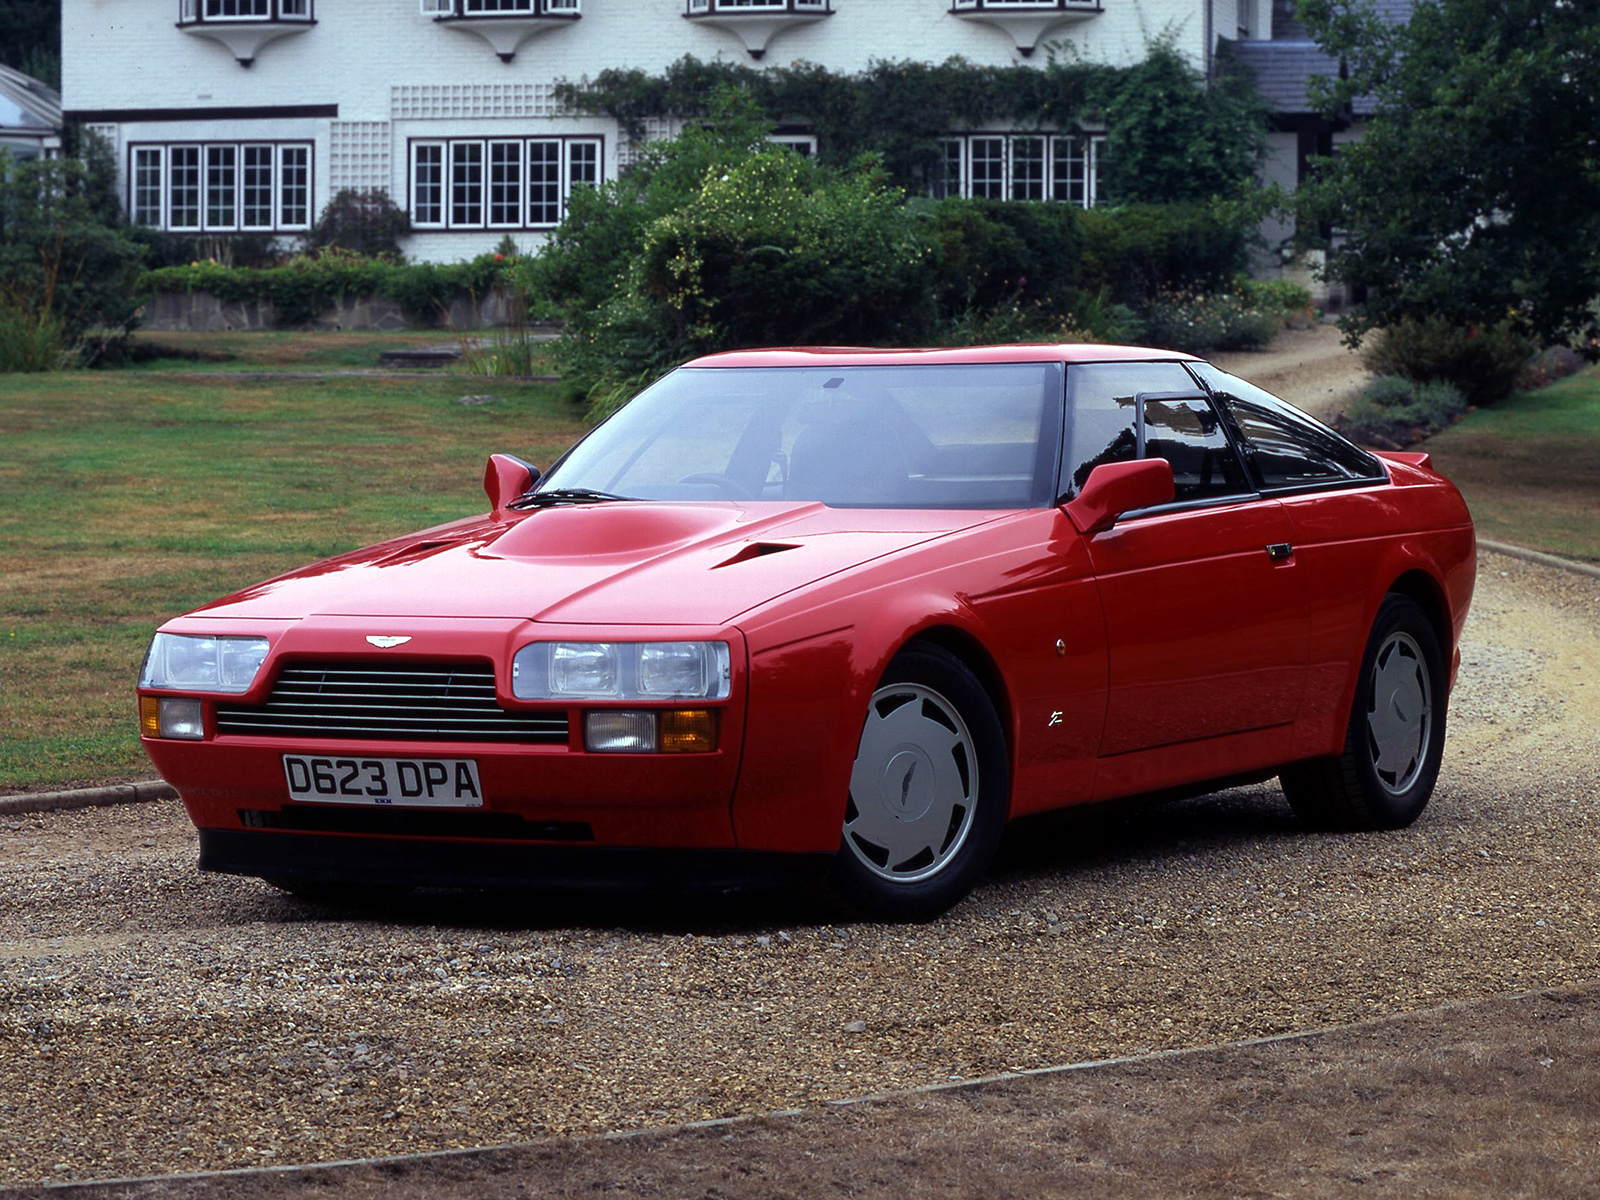 Aston Martin Vantage (Zagato), 1986